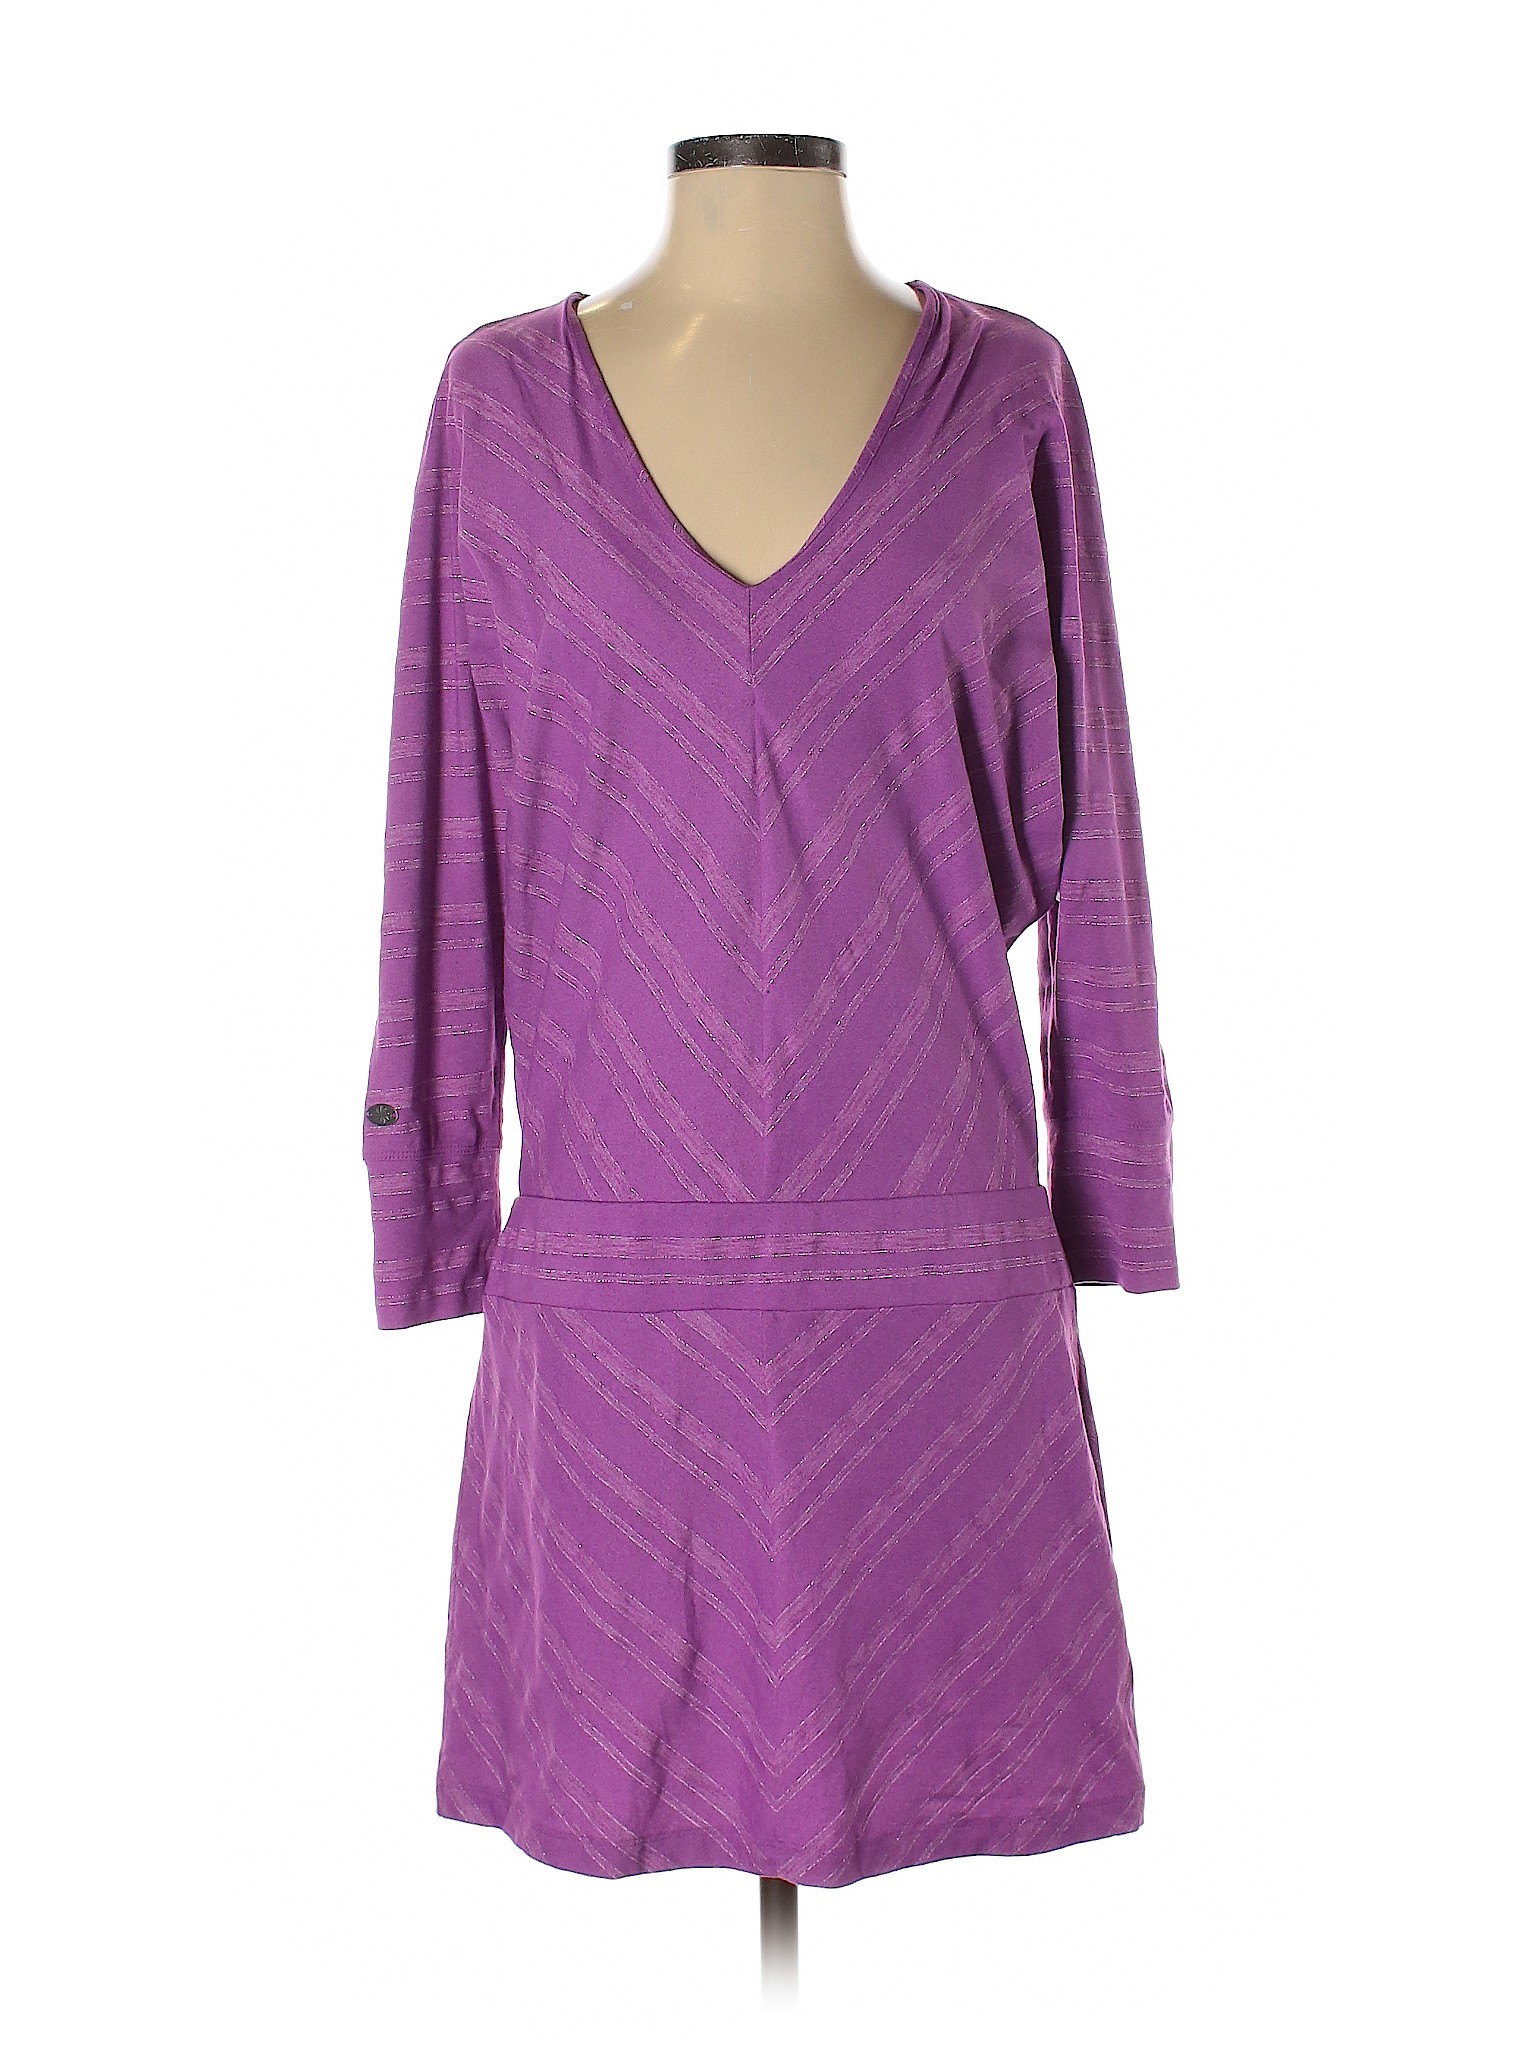 Athleta Women Purple Casual Dress S | eBay